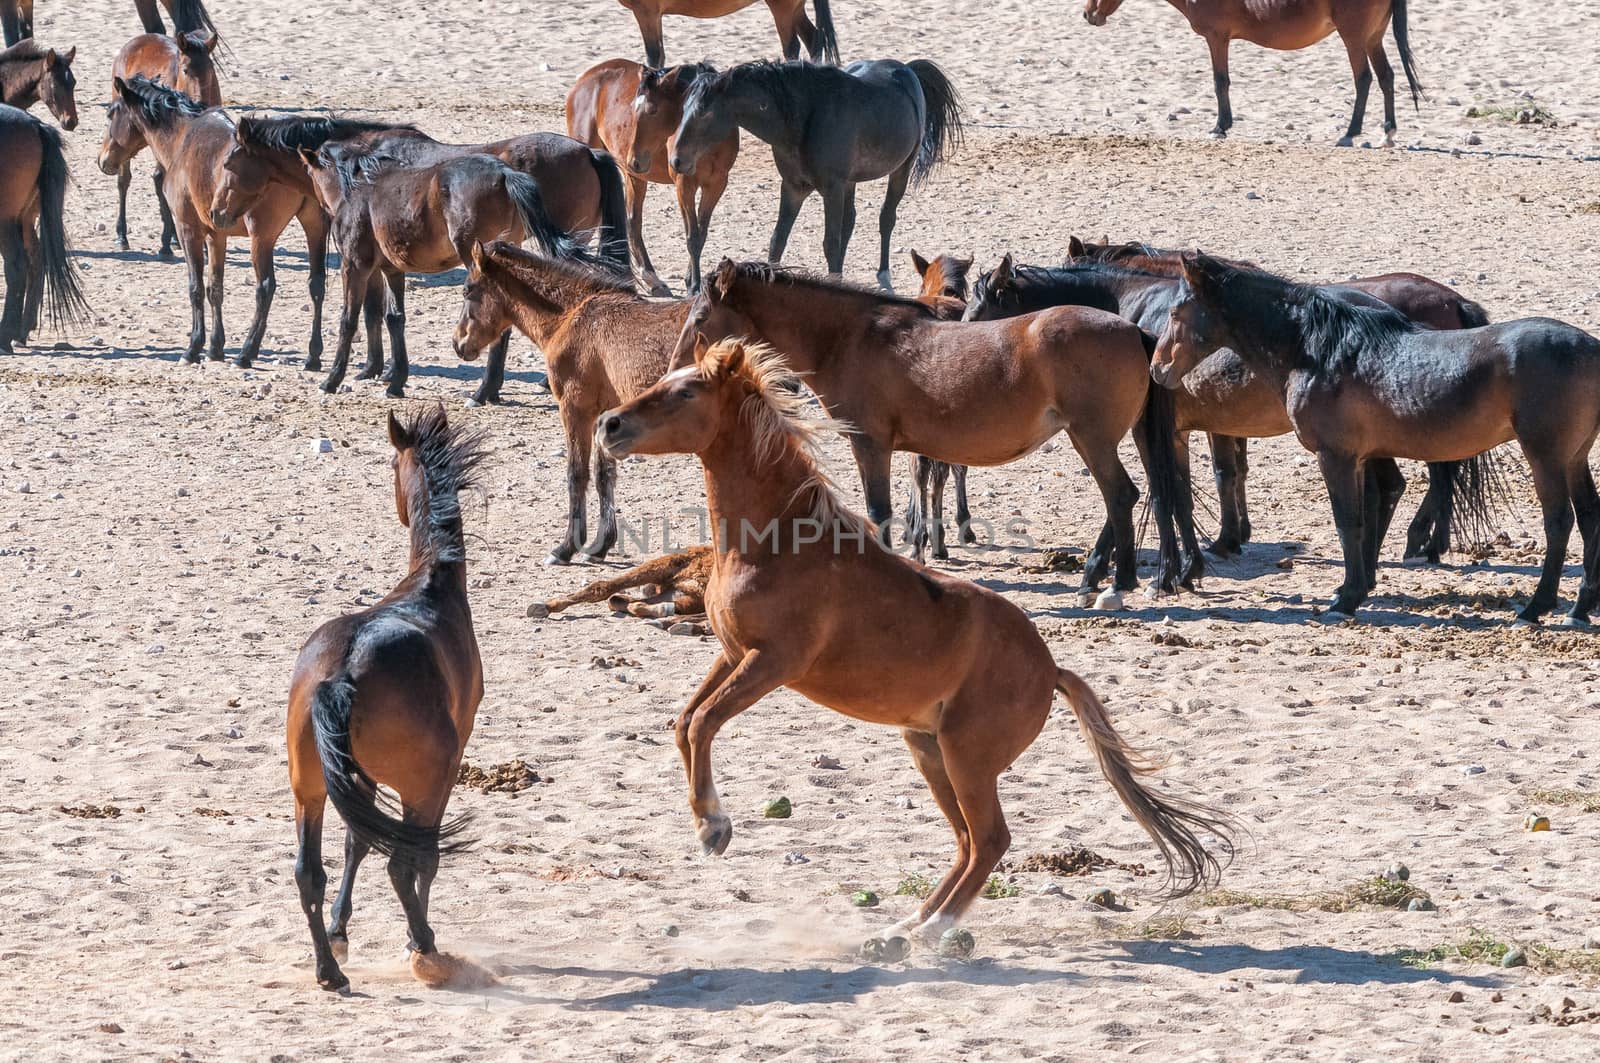 Wild horses of the Namib fighting at Garub near Aus